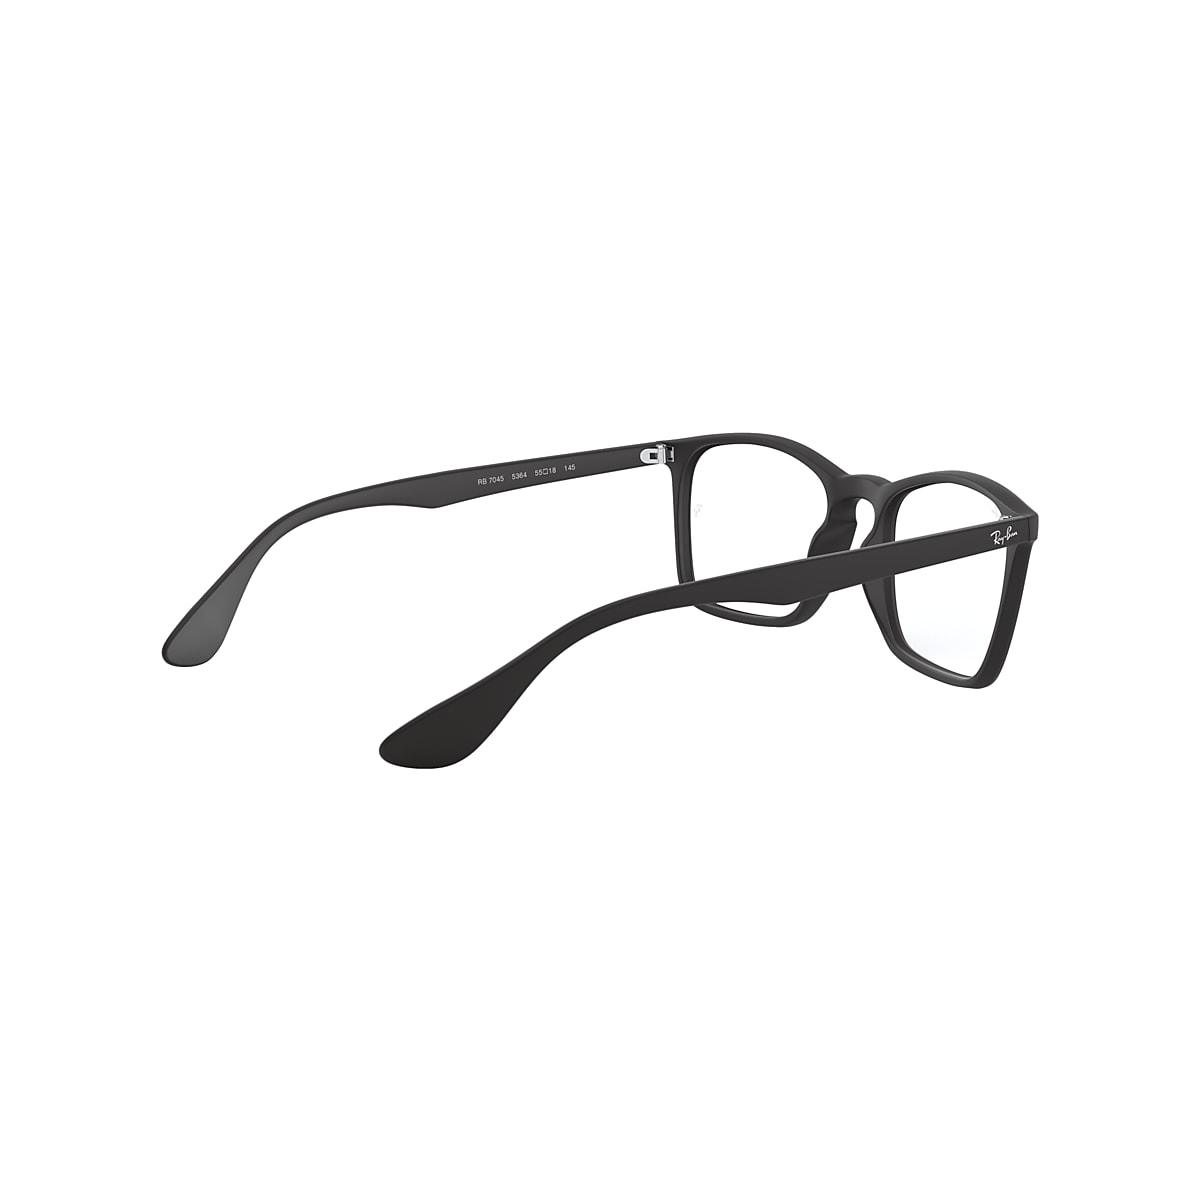 Chris Optics Eyeglasses with Black Frame | Ray-Ban®